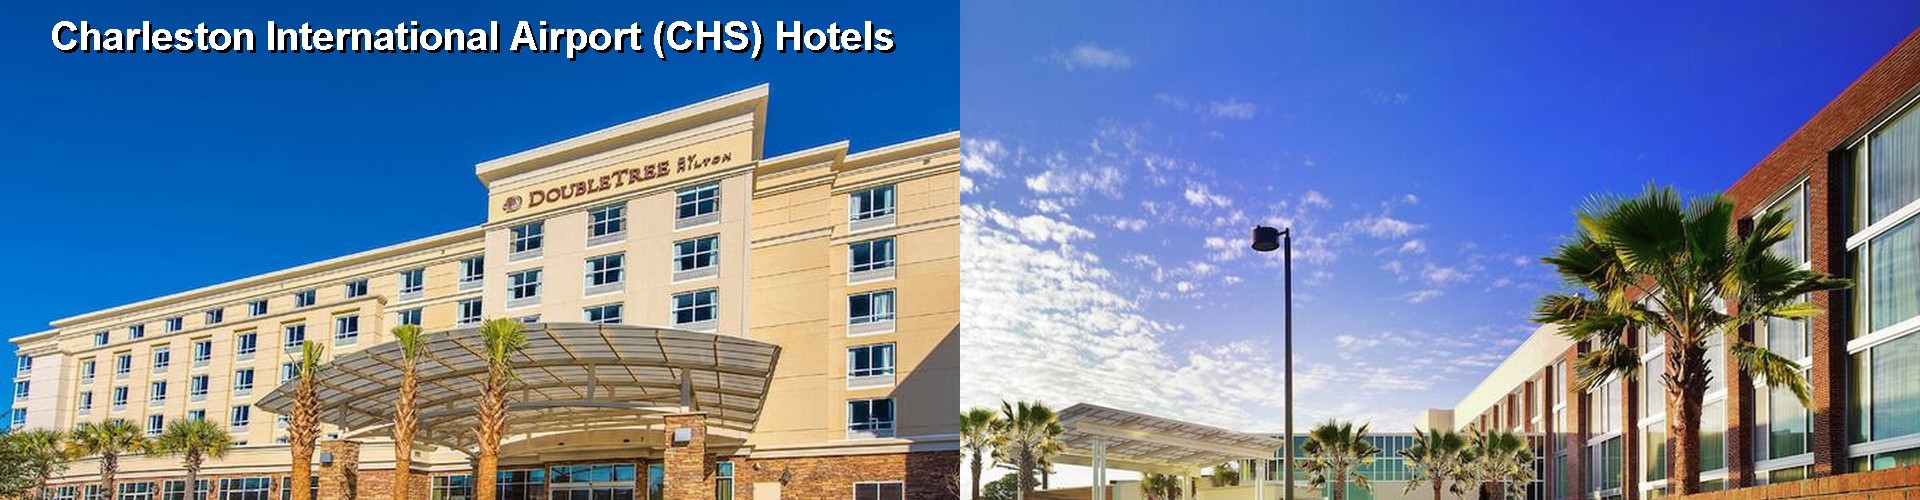 5 Best Hotels near Charleston International Airport (CHS)